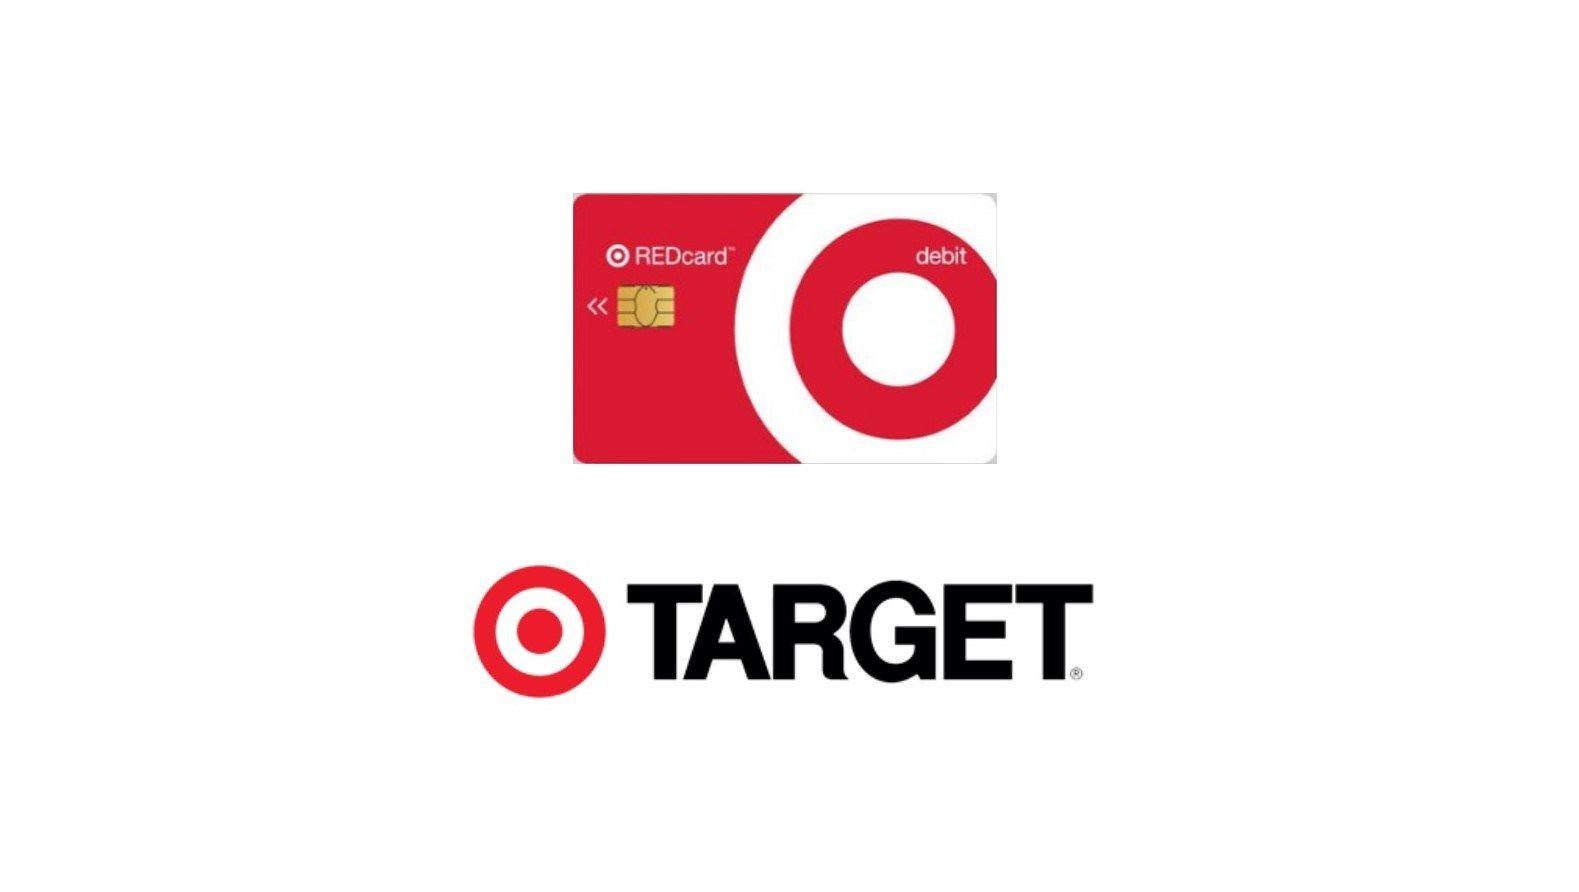 Target Red Card Logo - Target REDcard (Debit) Review